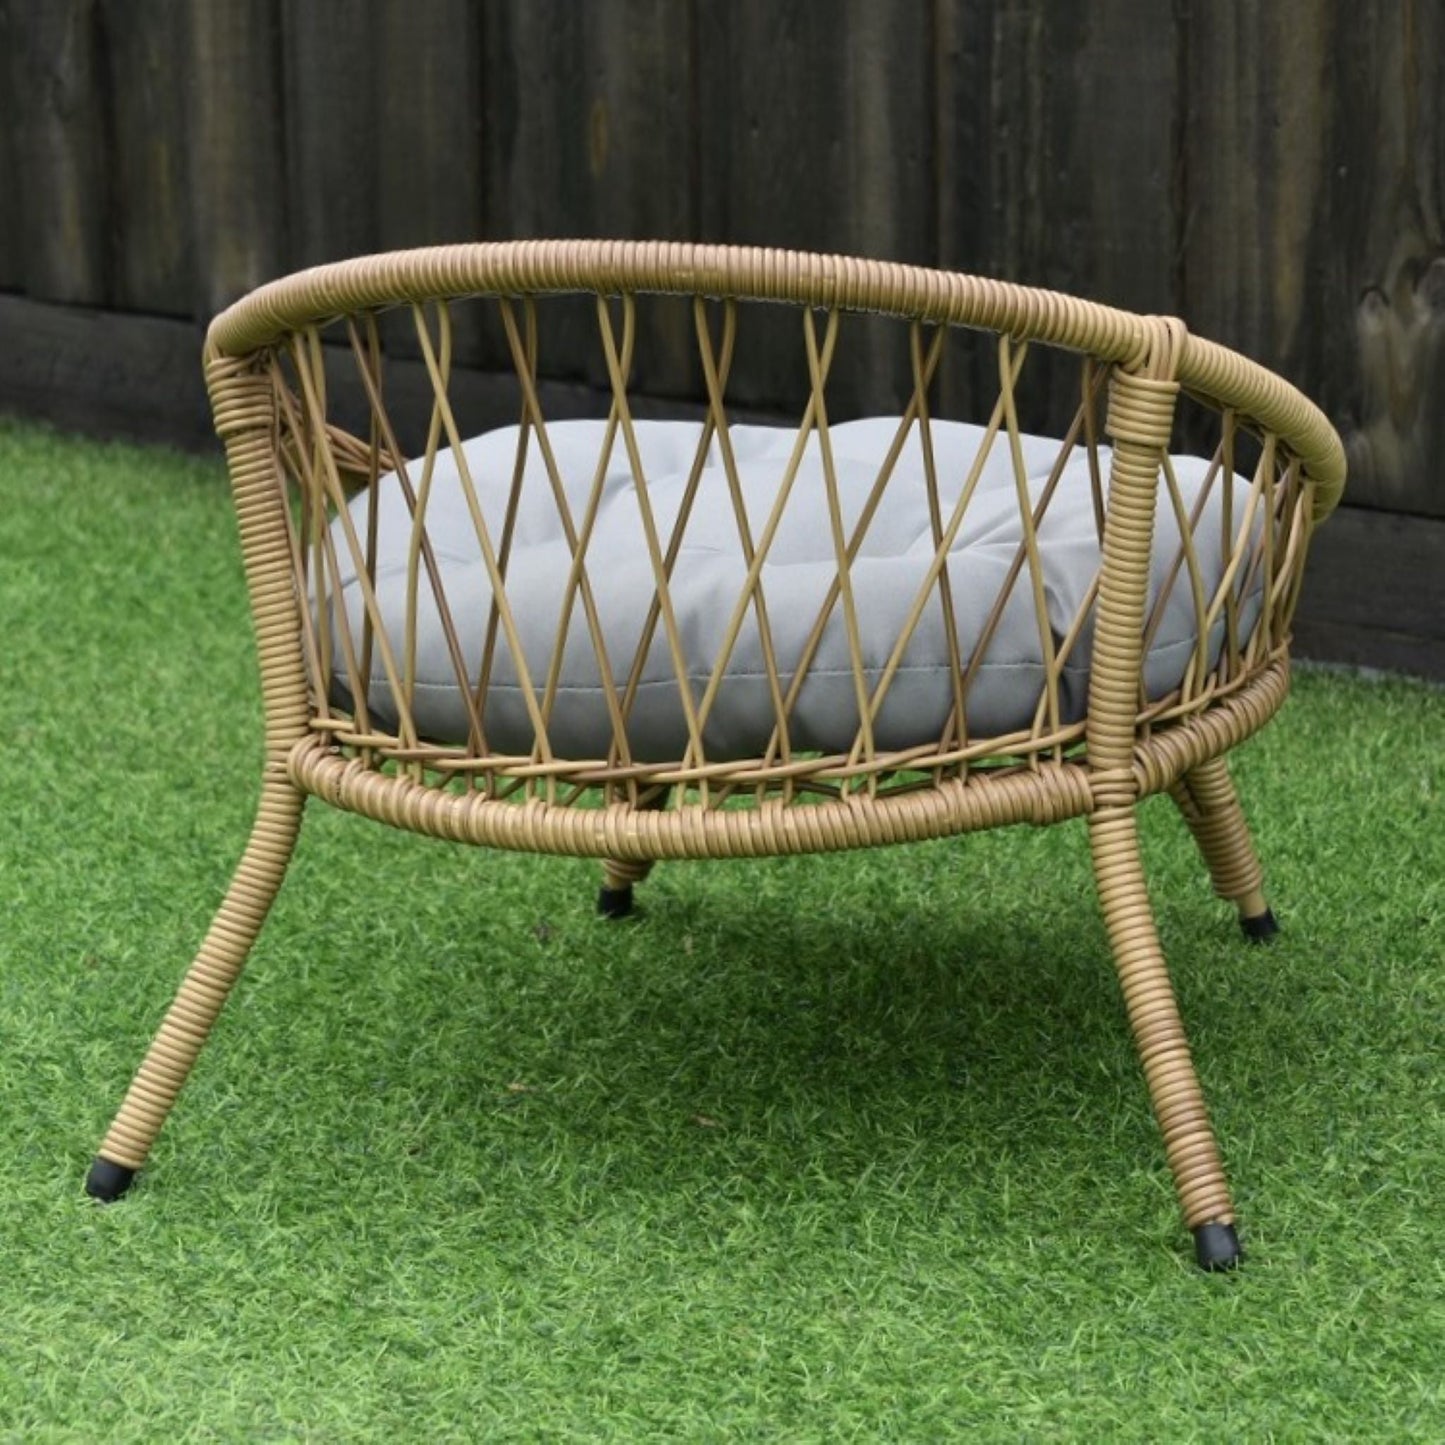 FEDDE Pet Basket Bed for Small Cat & Dog- Brown - Direct Factory Furniture Australia